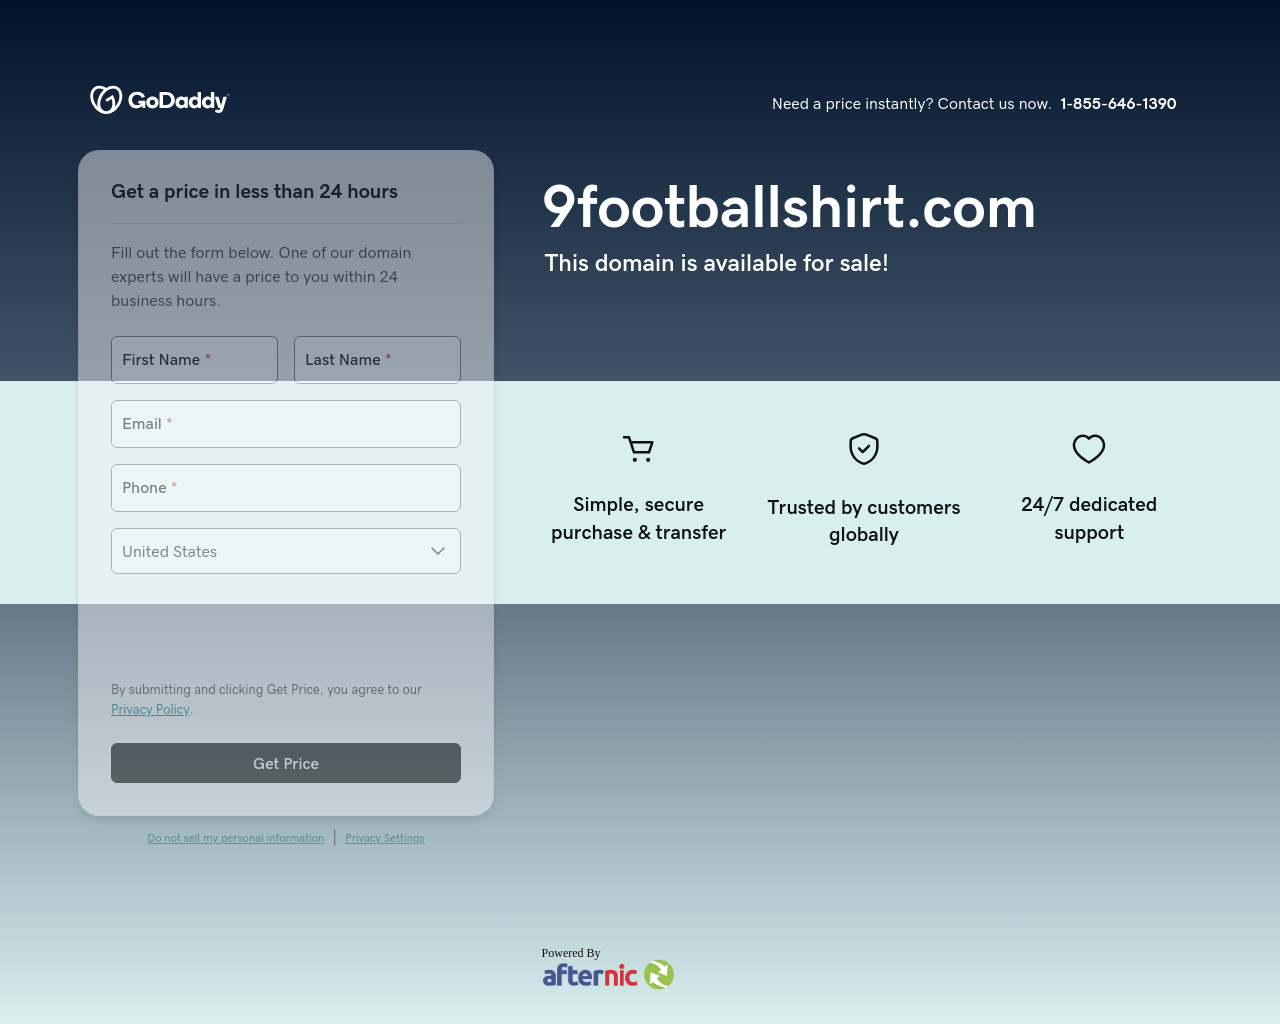 9footballshirt.com